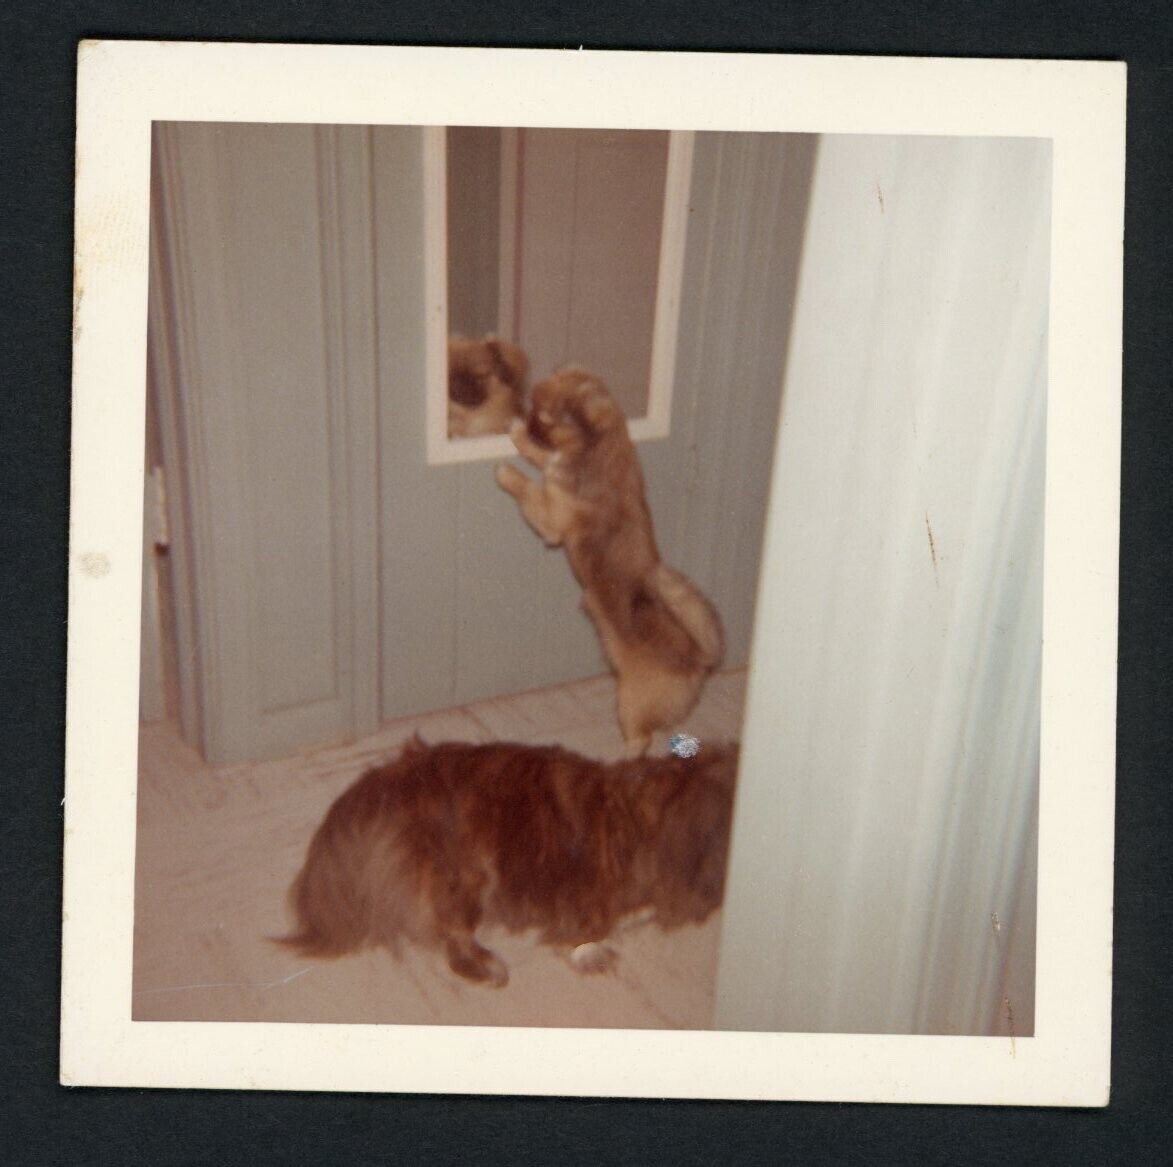 Cute Pekingese Dog Puppy Looks in Mirror Reflection Photo Snapshot 1960s Pets